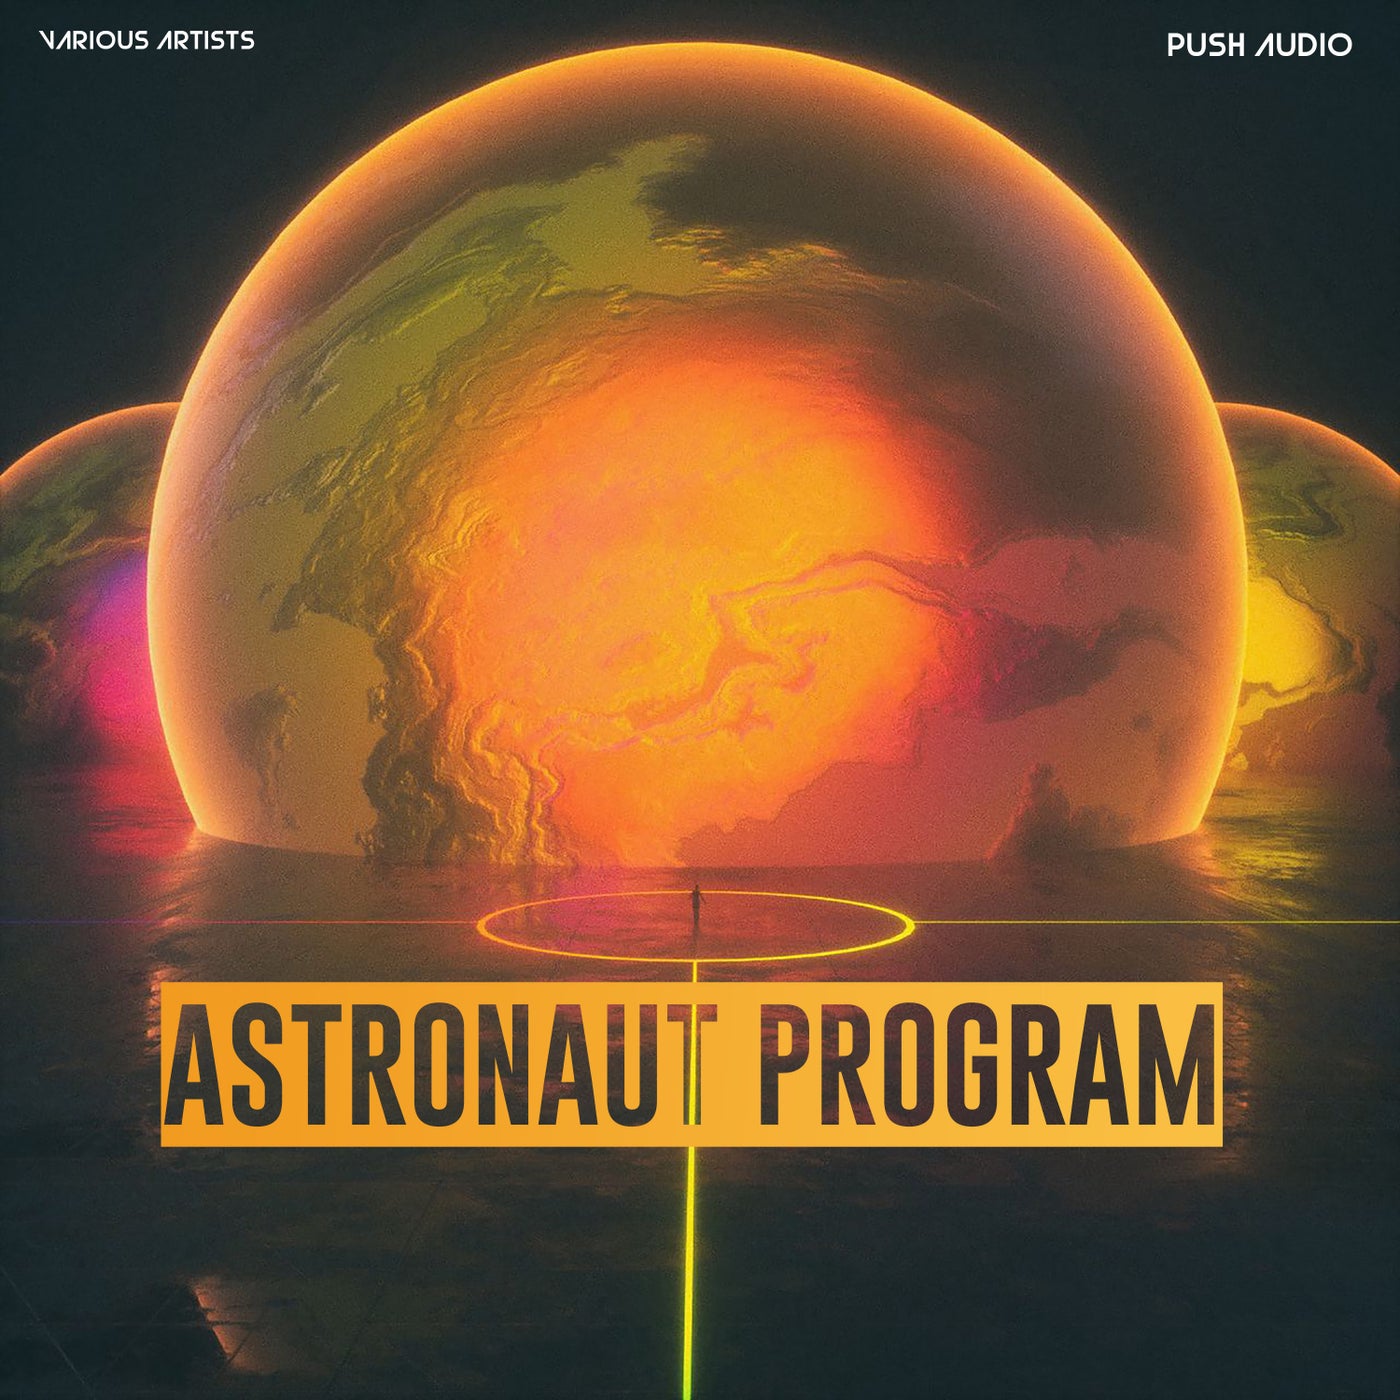 Astronaut Program